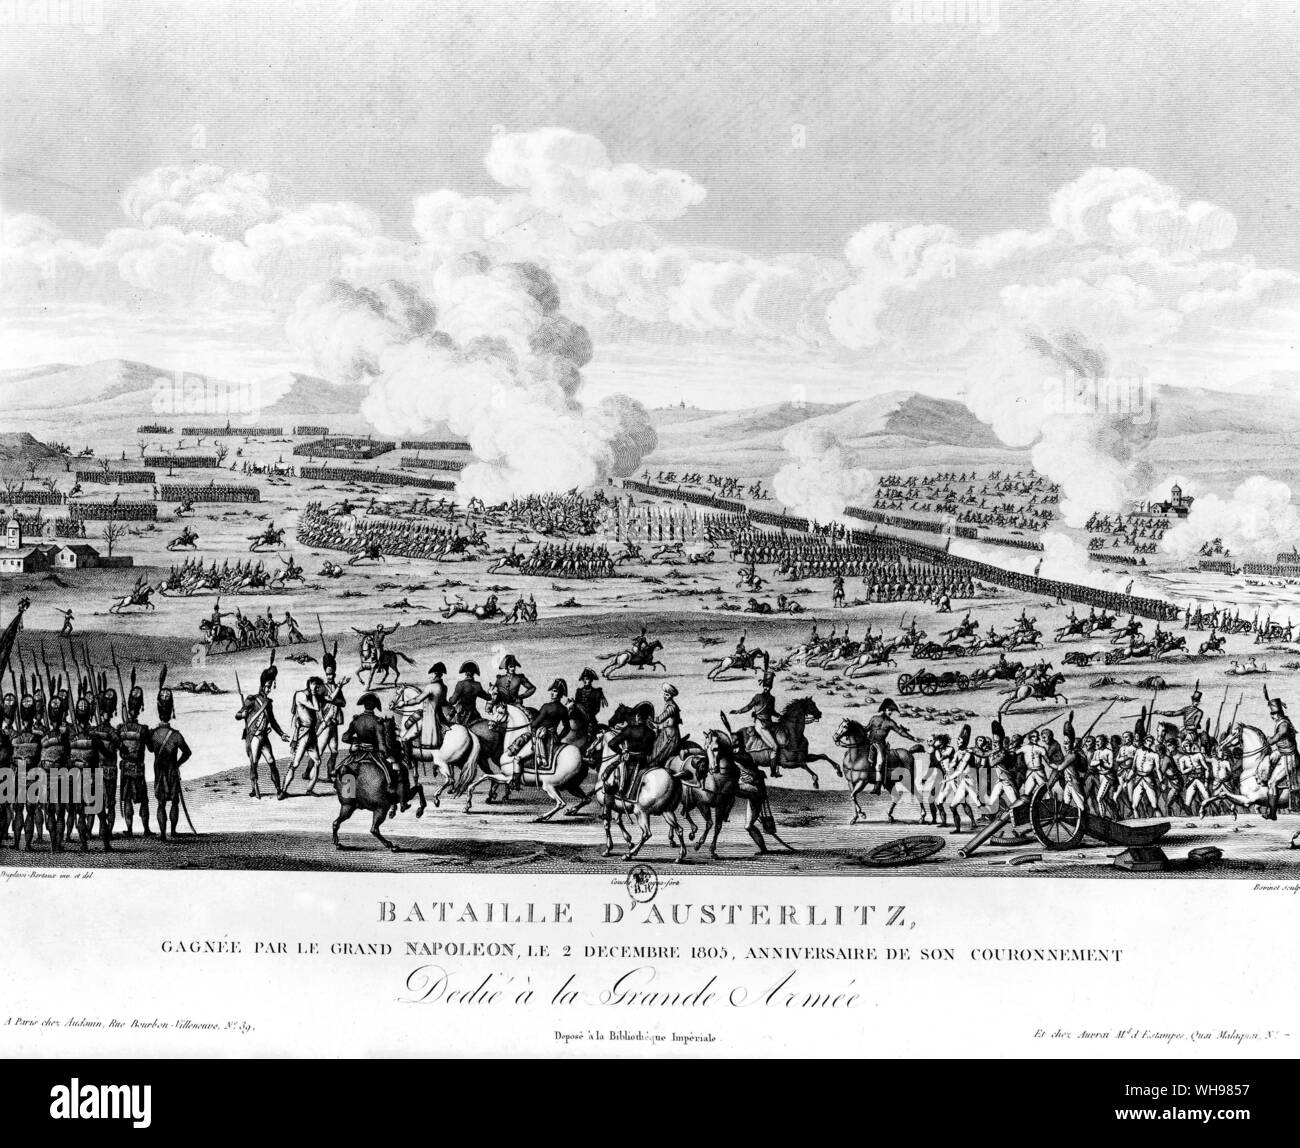 Warfare/ Battle of Austerlitz, 1805. Napoleonic wars. Stock Photo